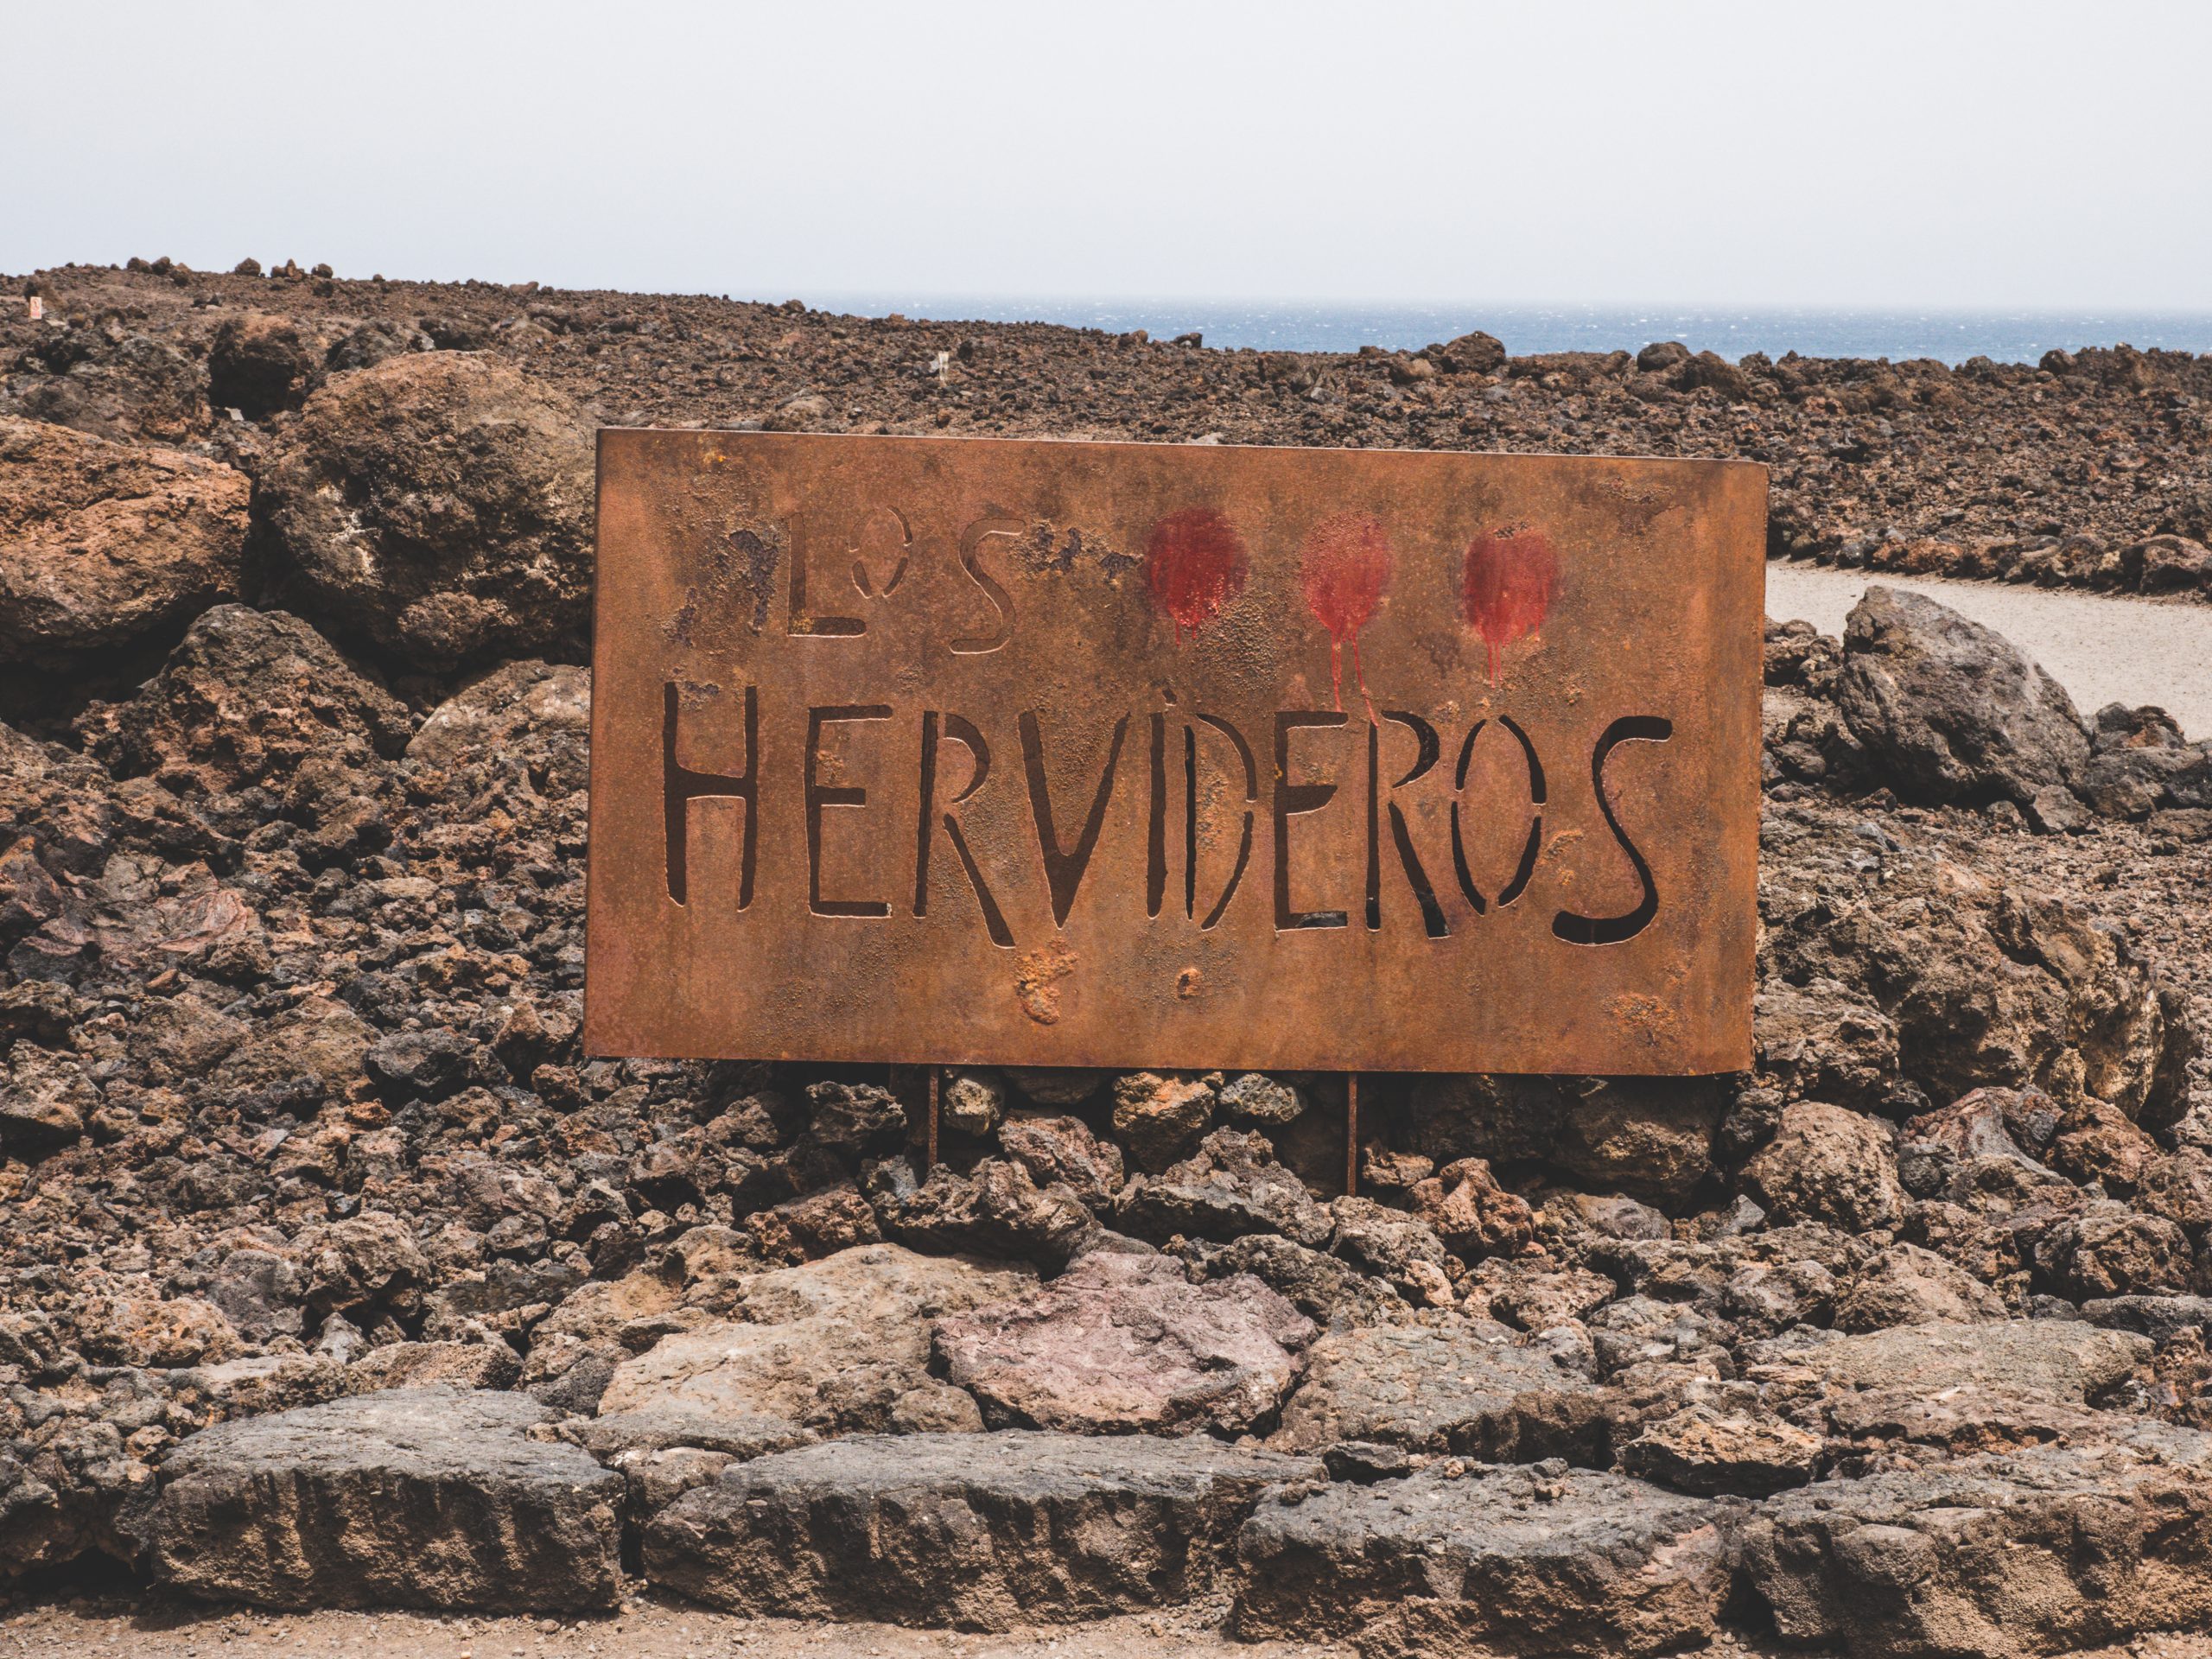 Panneau du lieu Los Hervideros